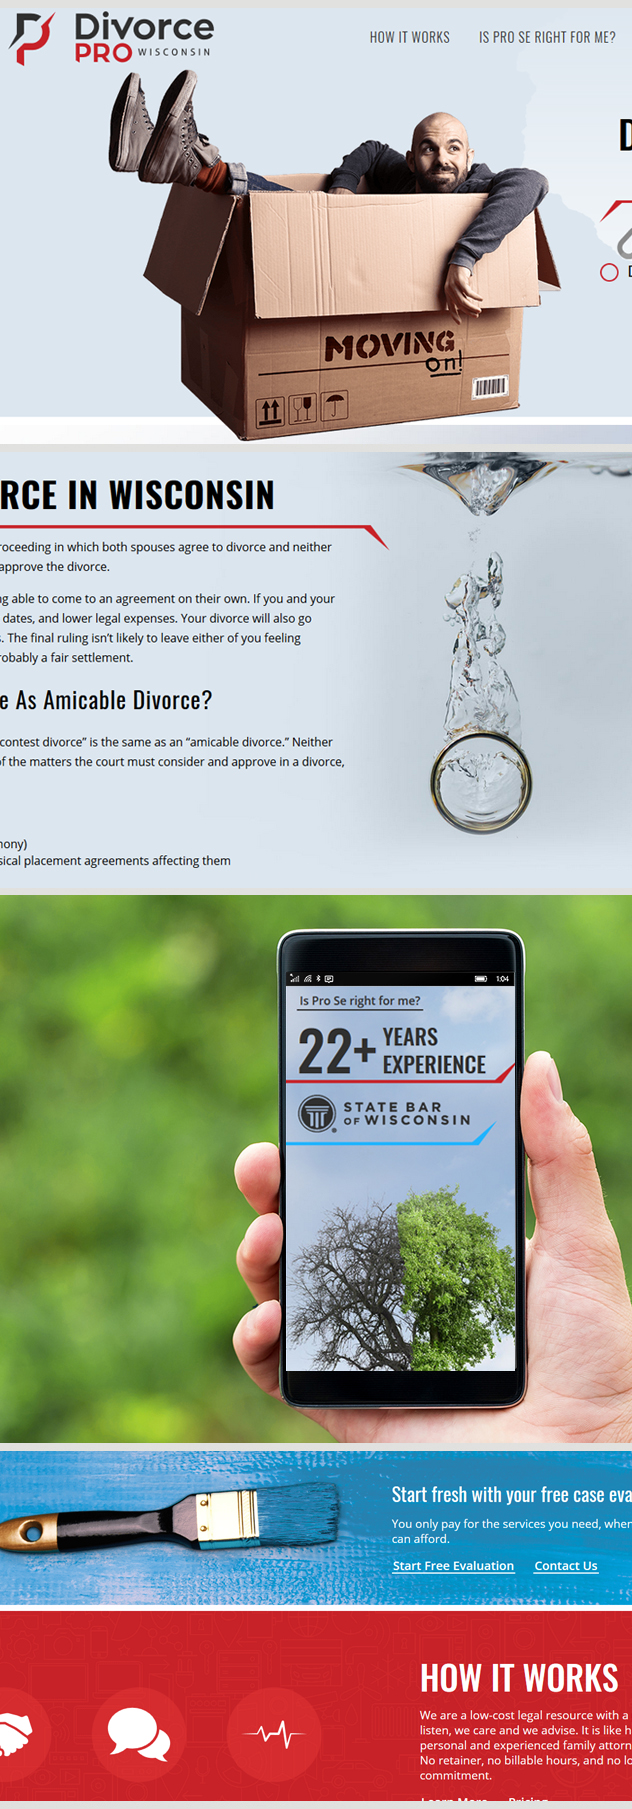 Milwaukee web marketing for Divorce Pro Wisconsin